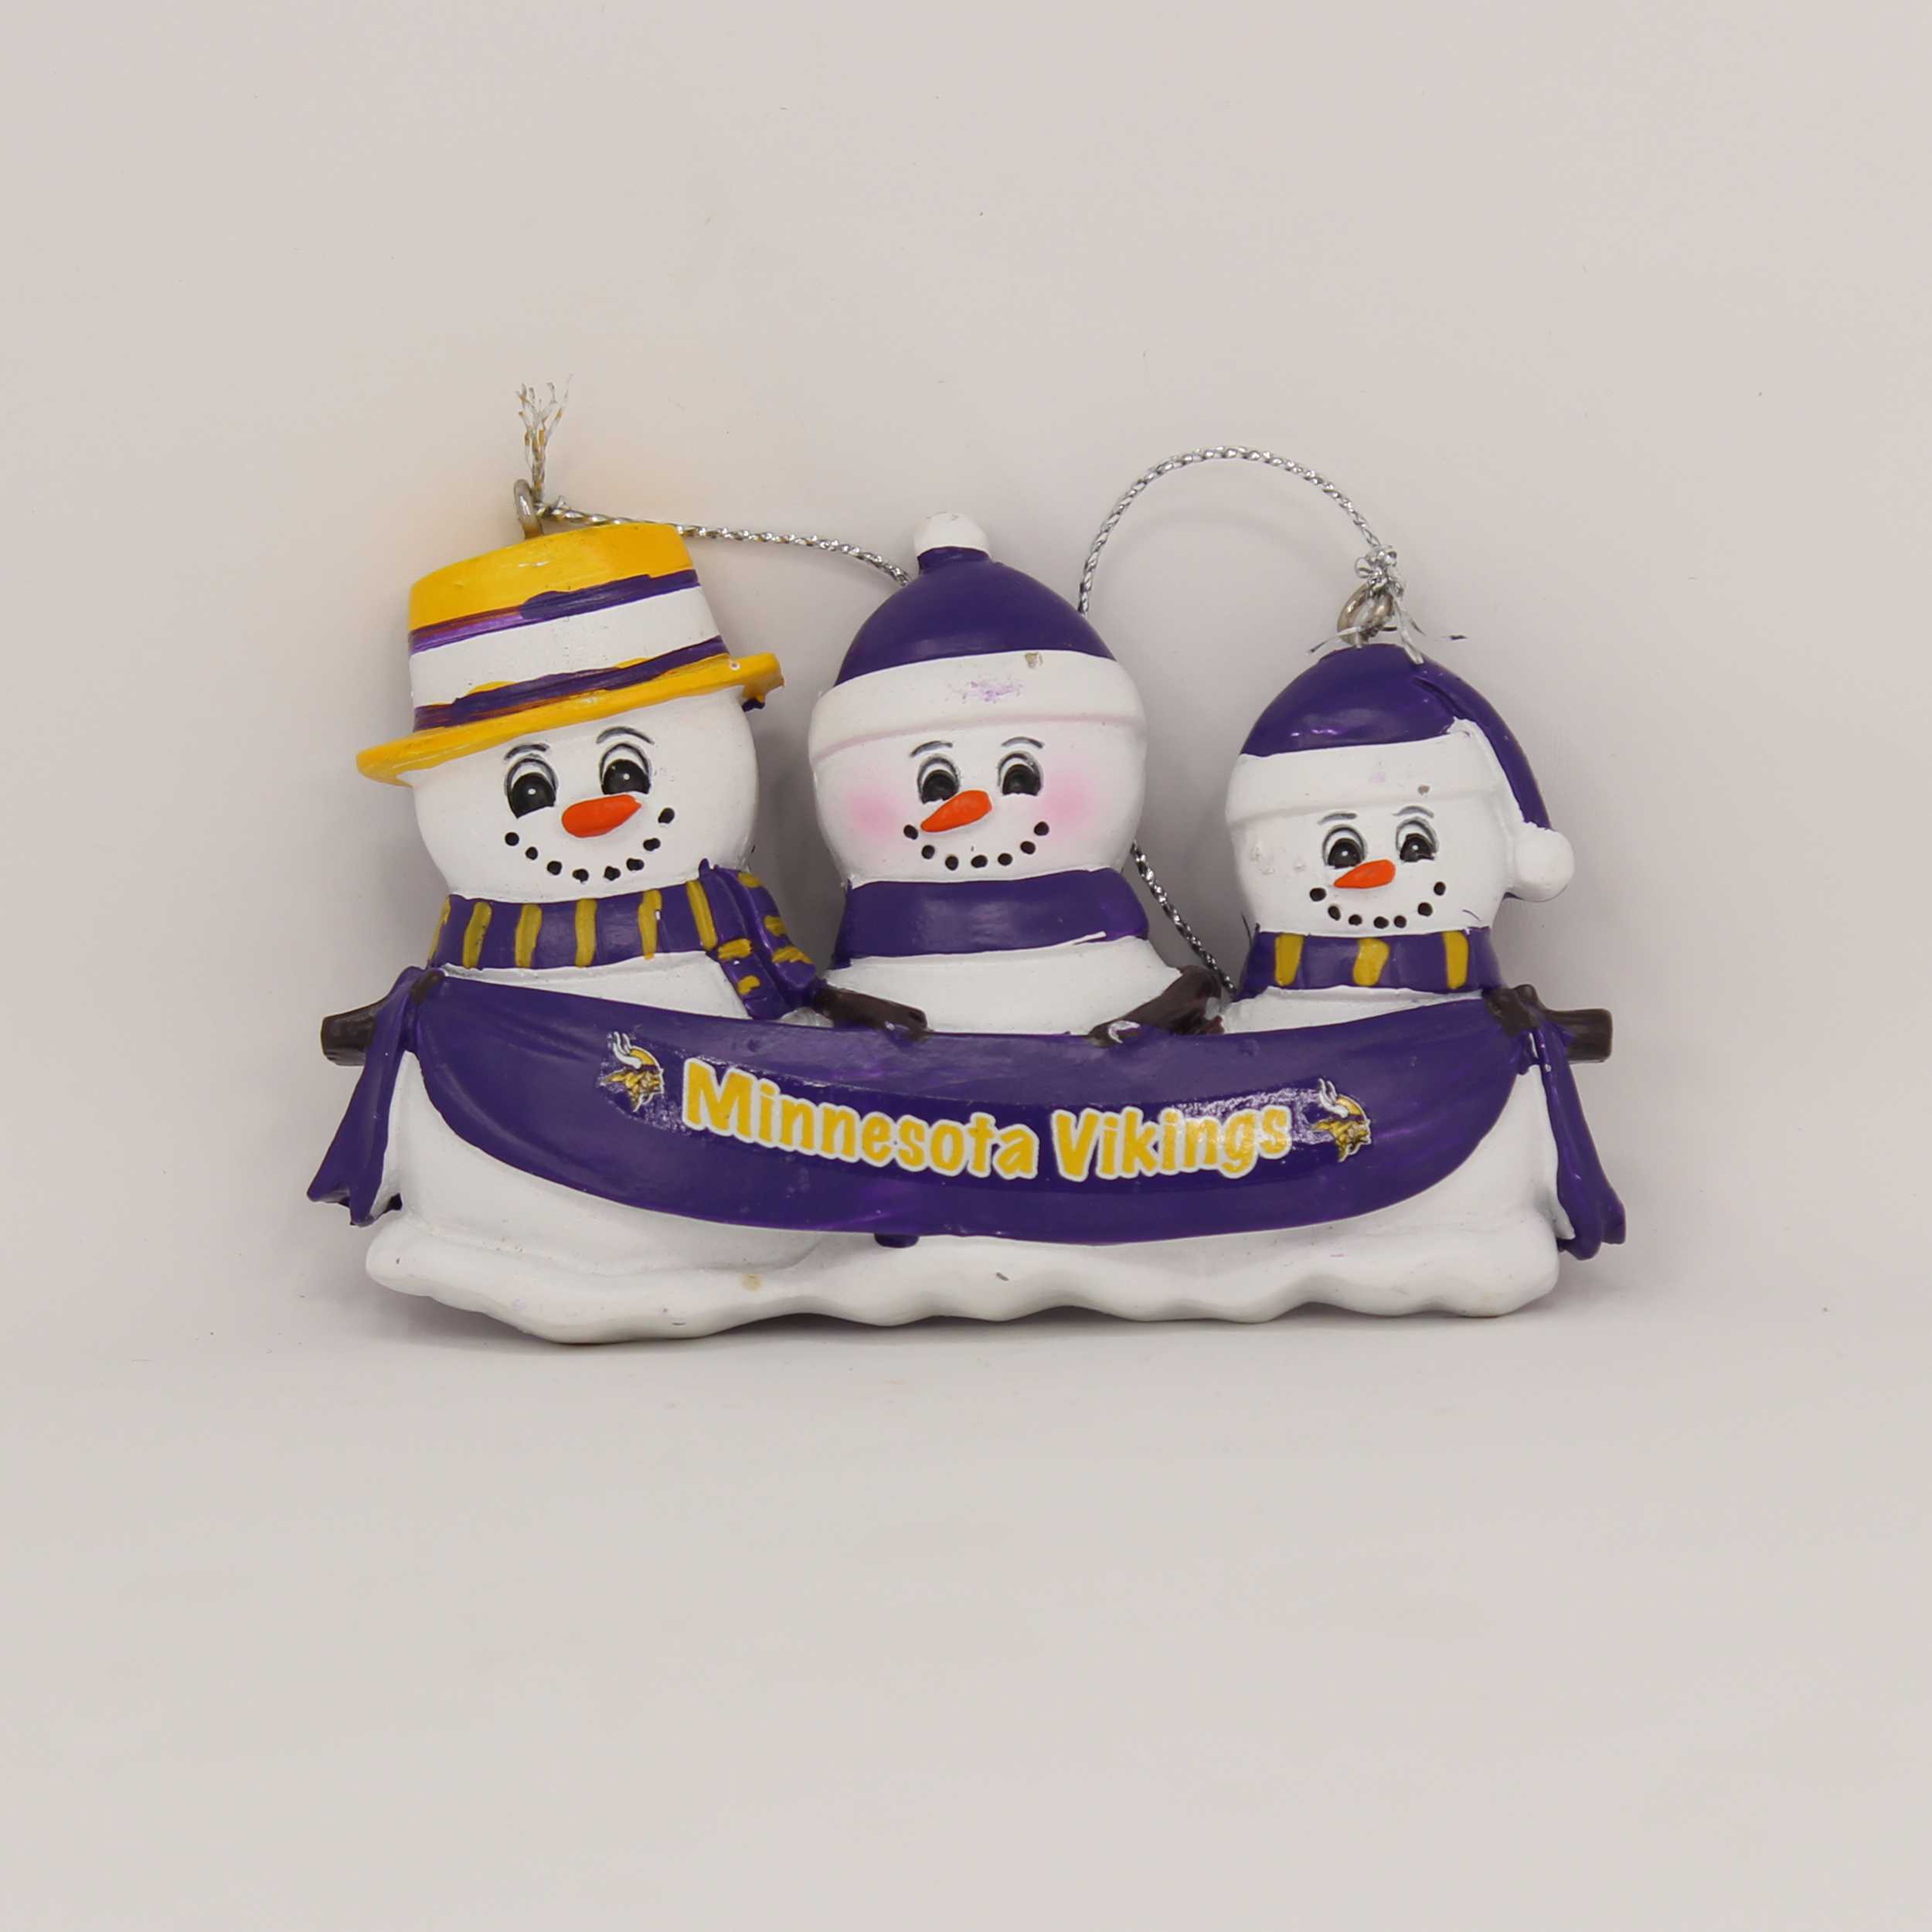 Personalized Family Ornament Minnesota Vikings